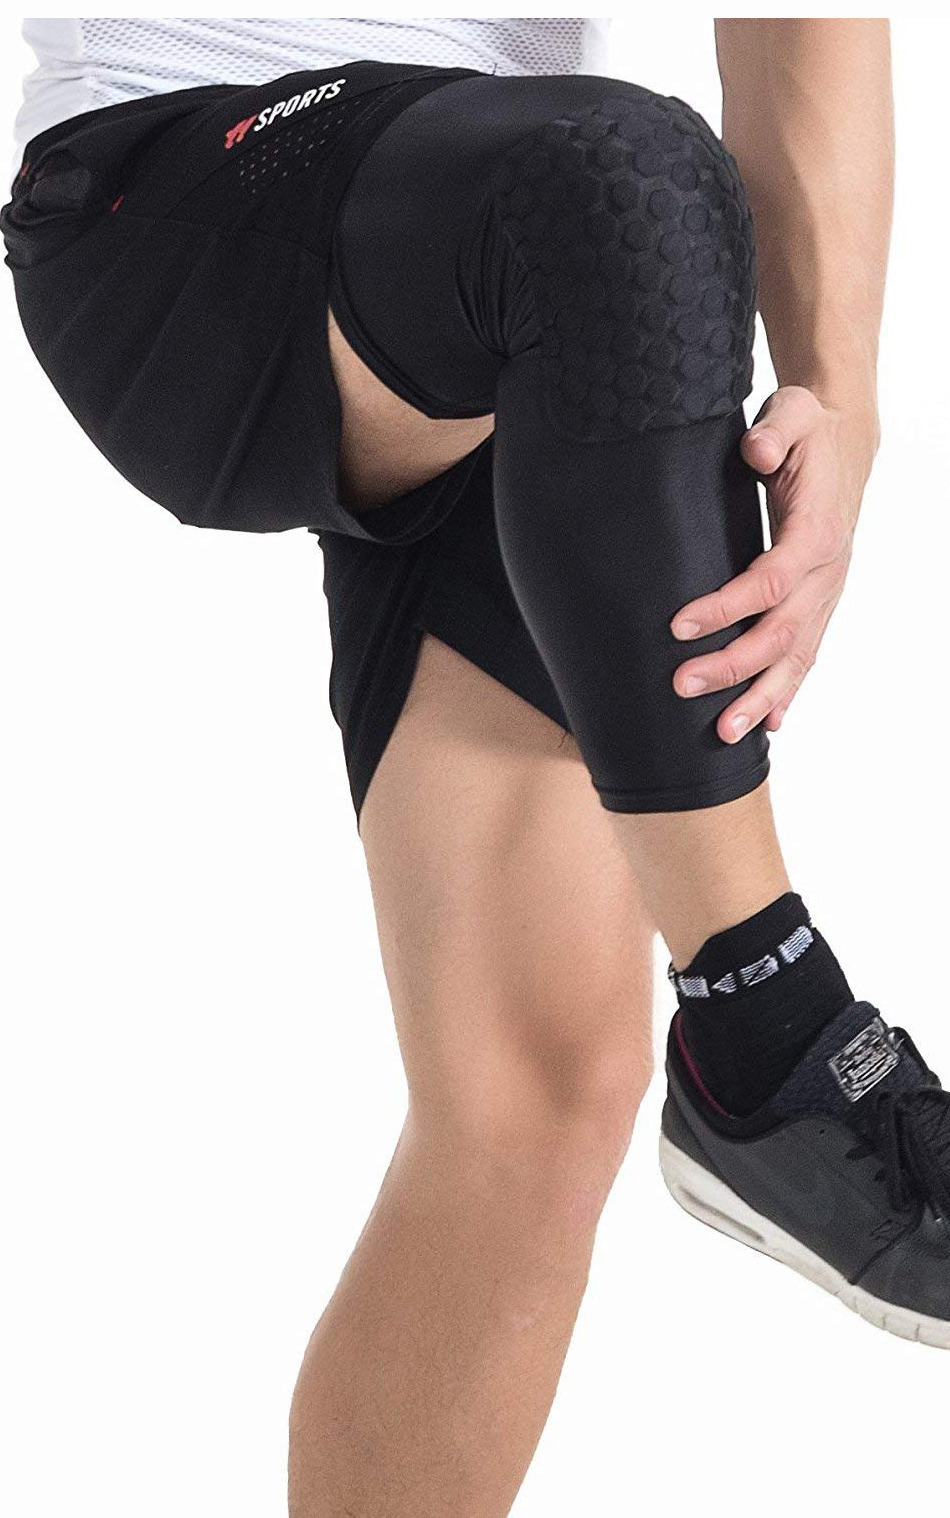 Elastic Protective Knee Pads